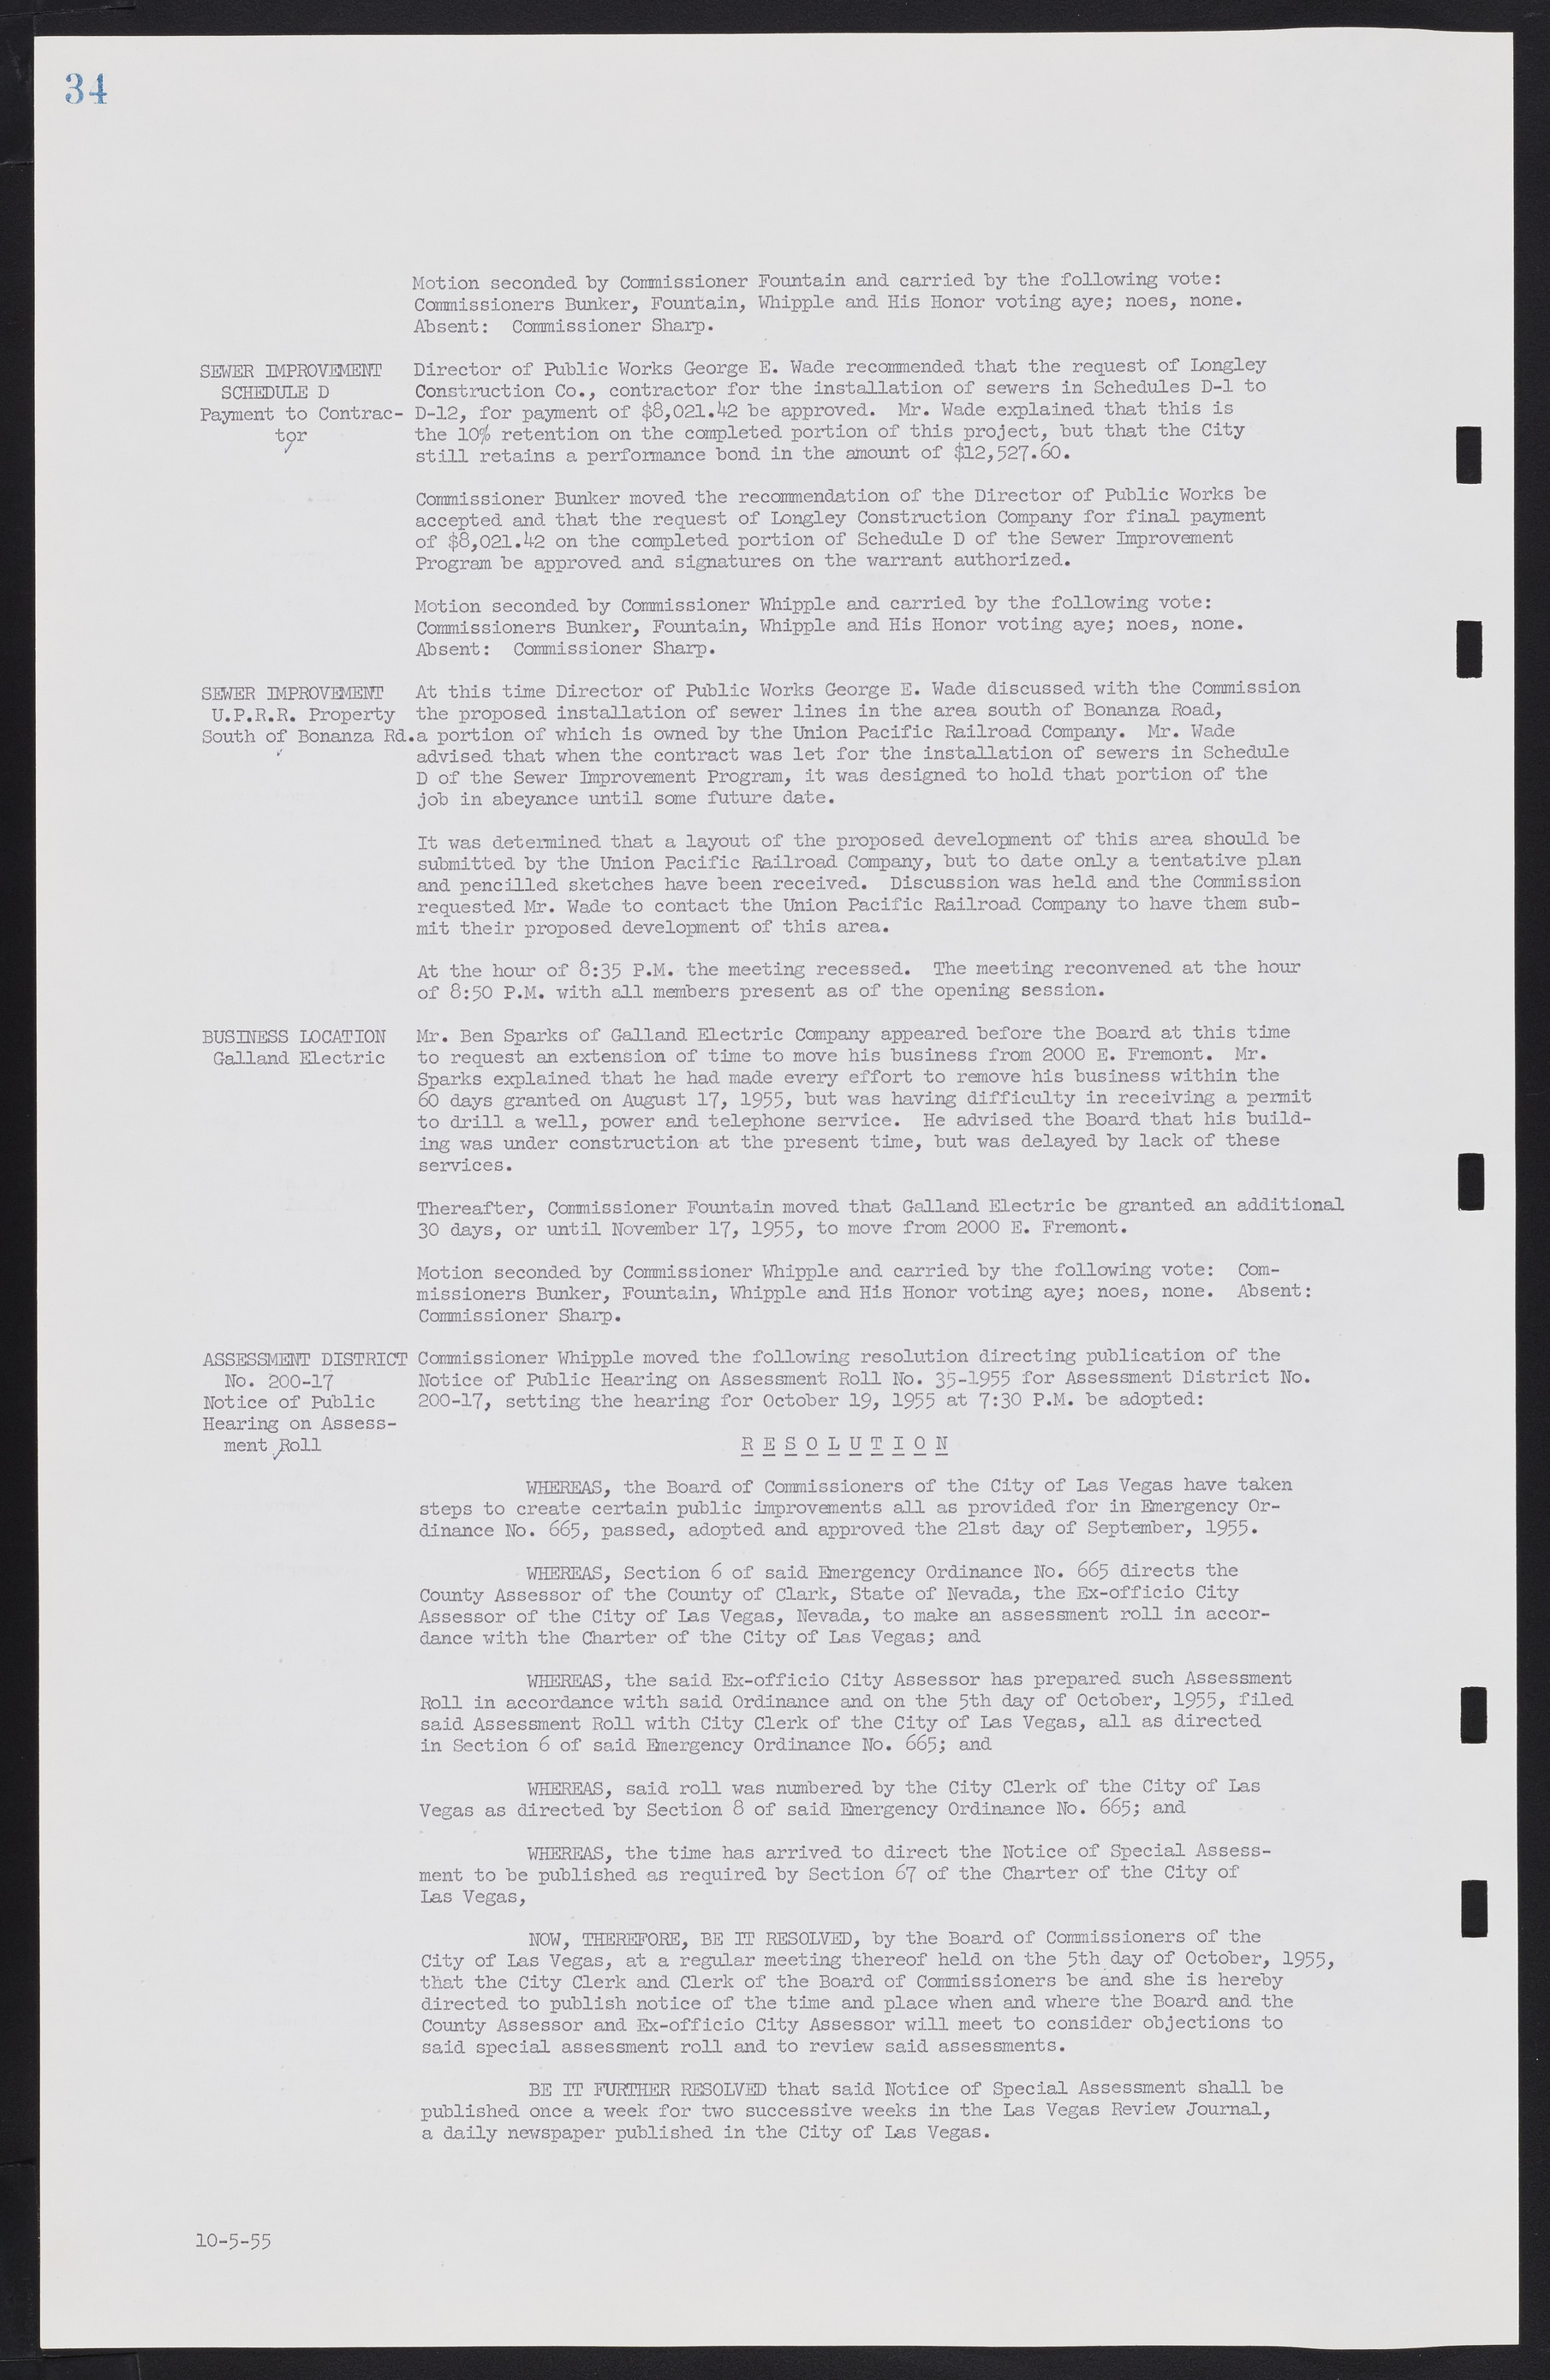 Las Vegas City Commission Minutes, September 21, 1955 to November 20, 1957, lvc000010-40